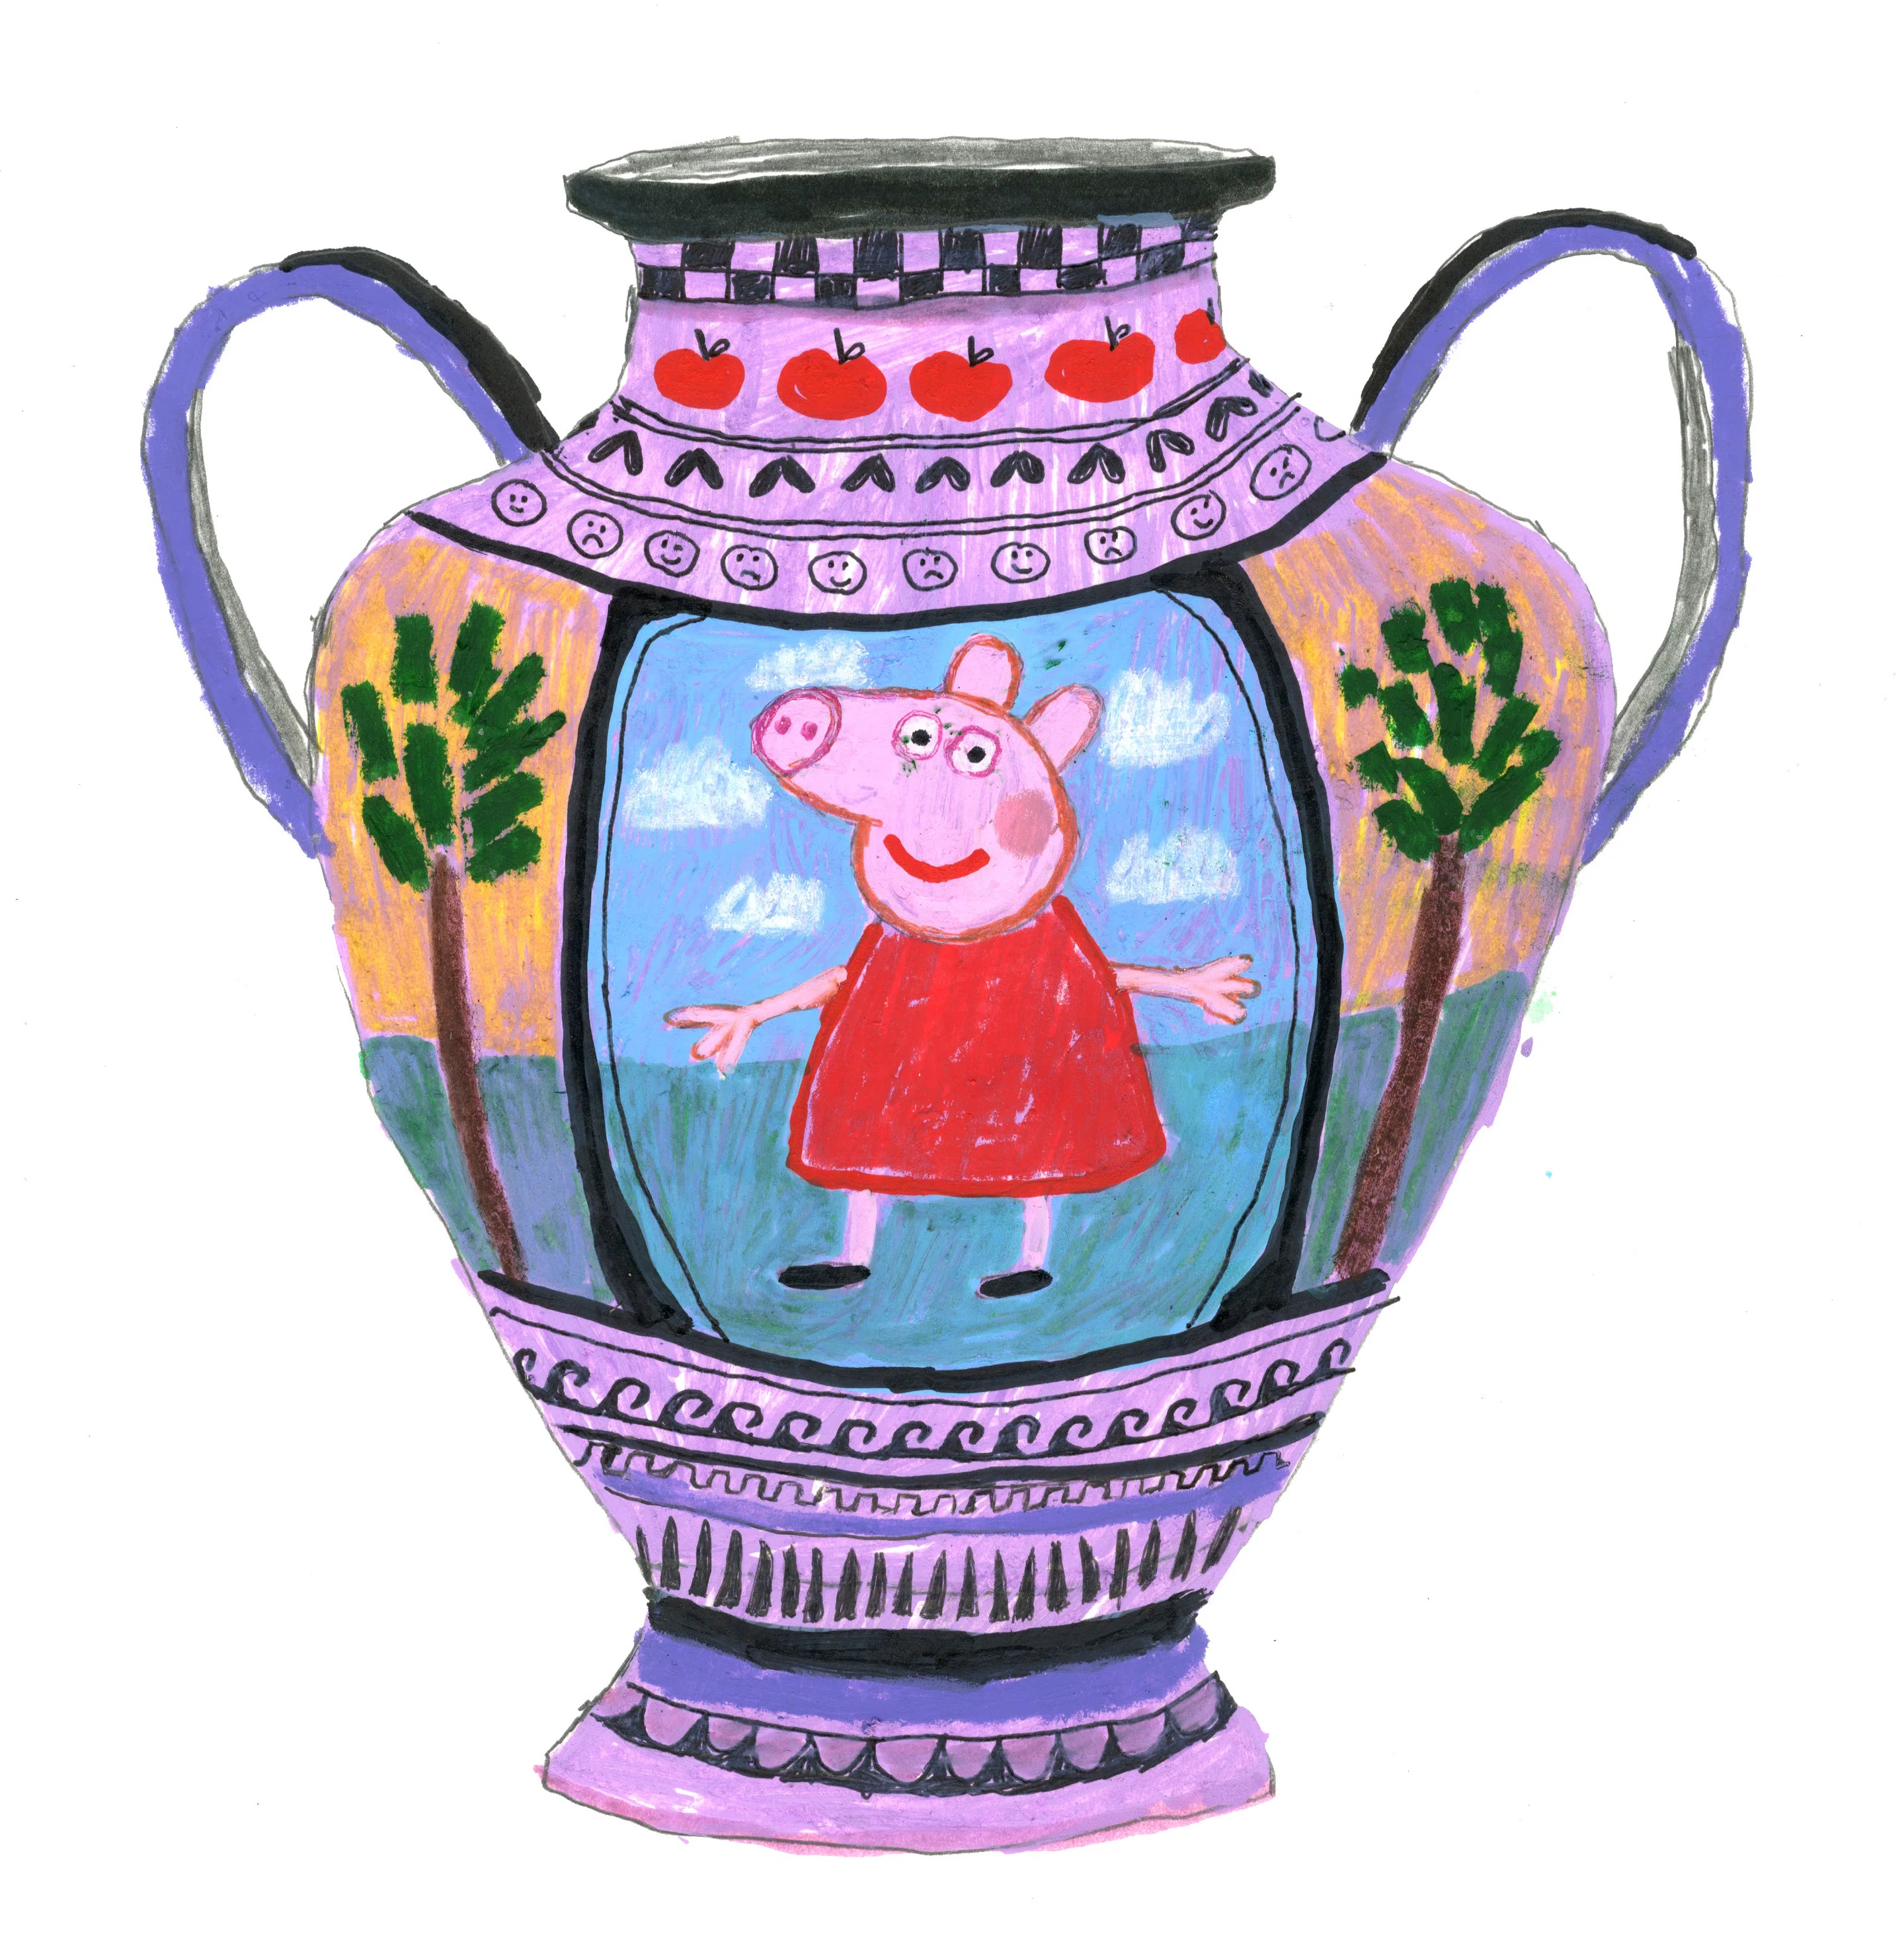 Ancient art for 21st kids: Saskia Janssen illustrates vases with children's cartoon characters